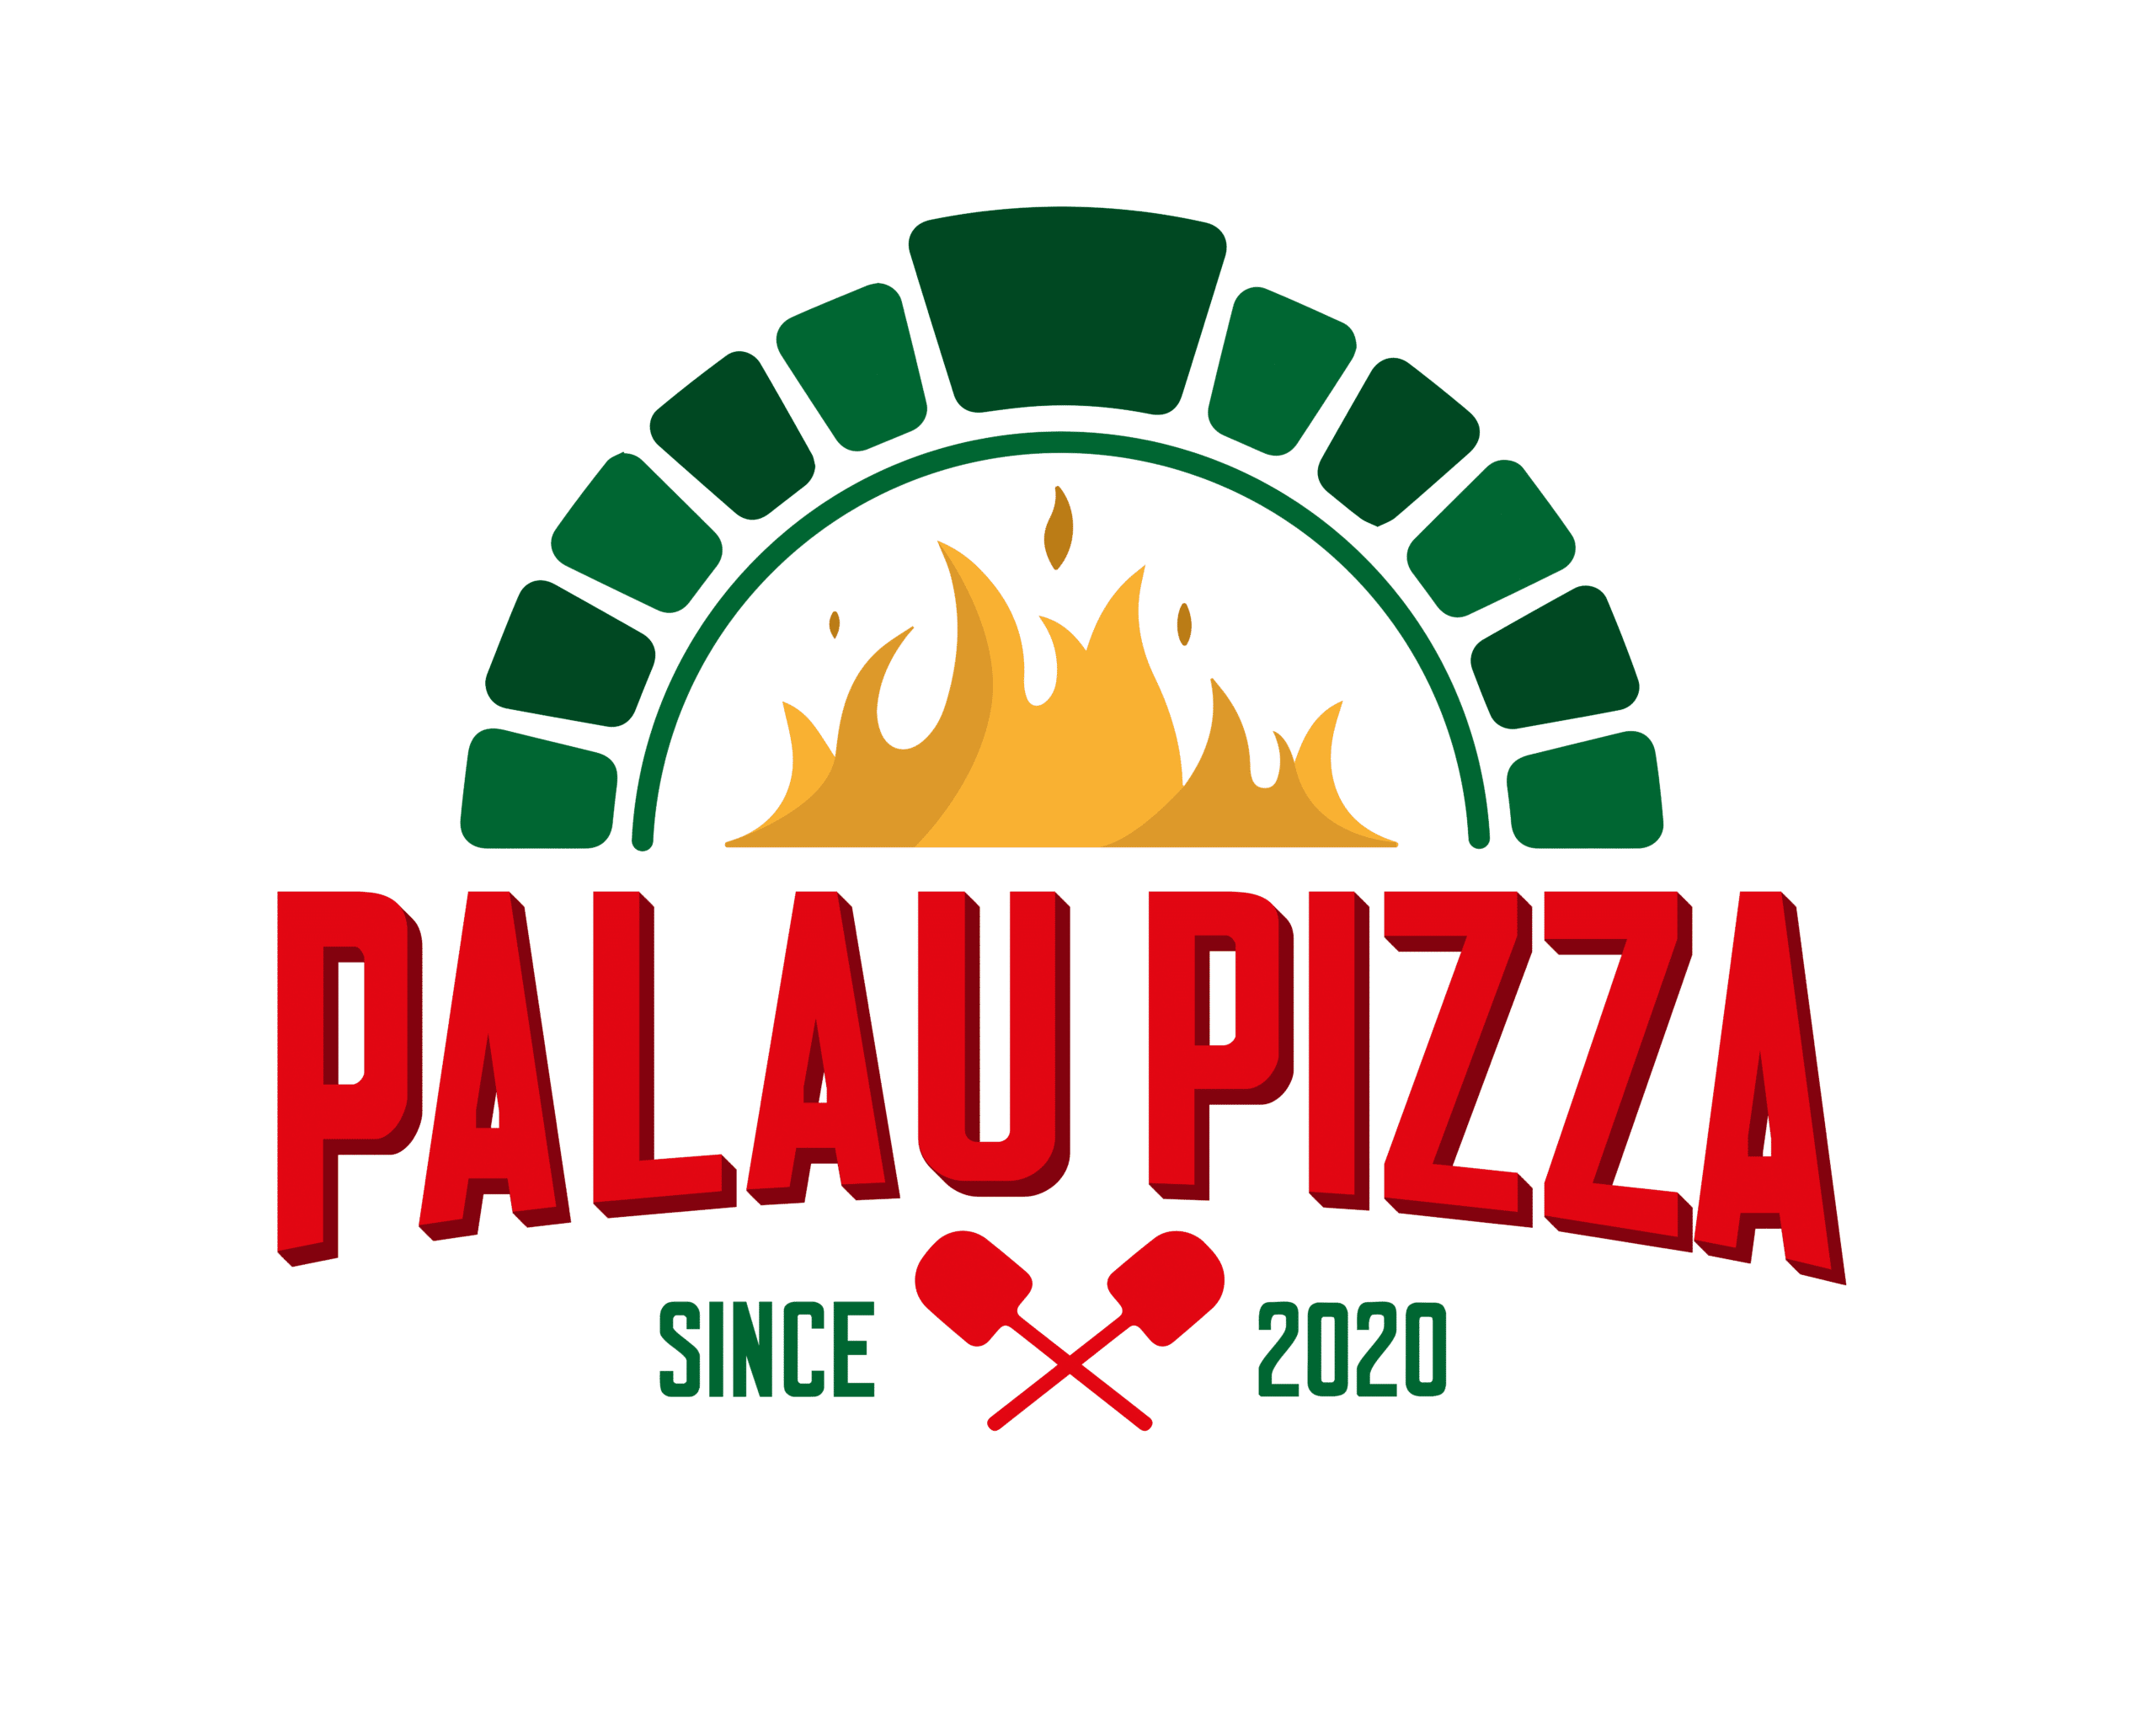 PALAU PIZZA